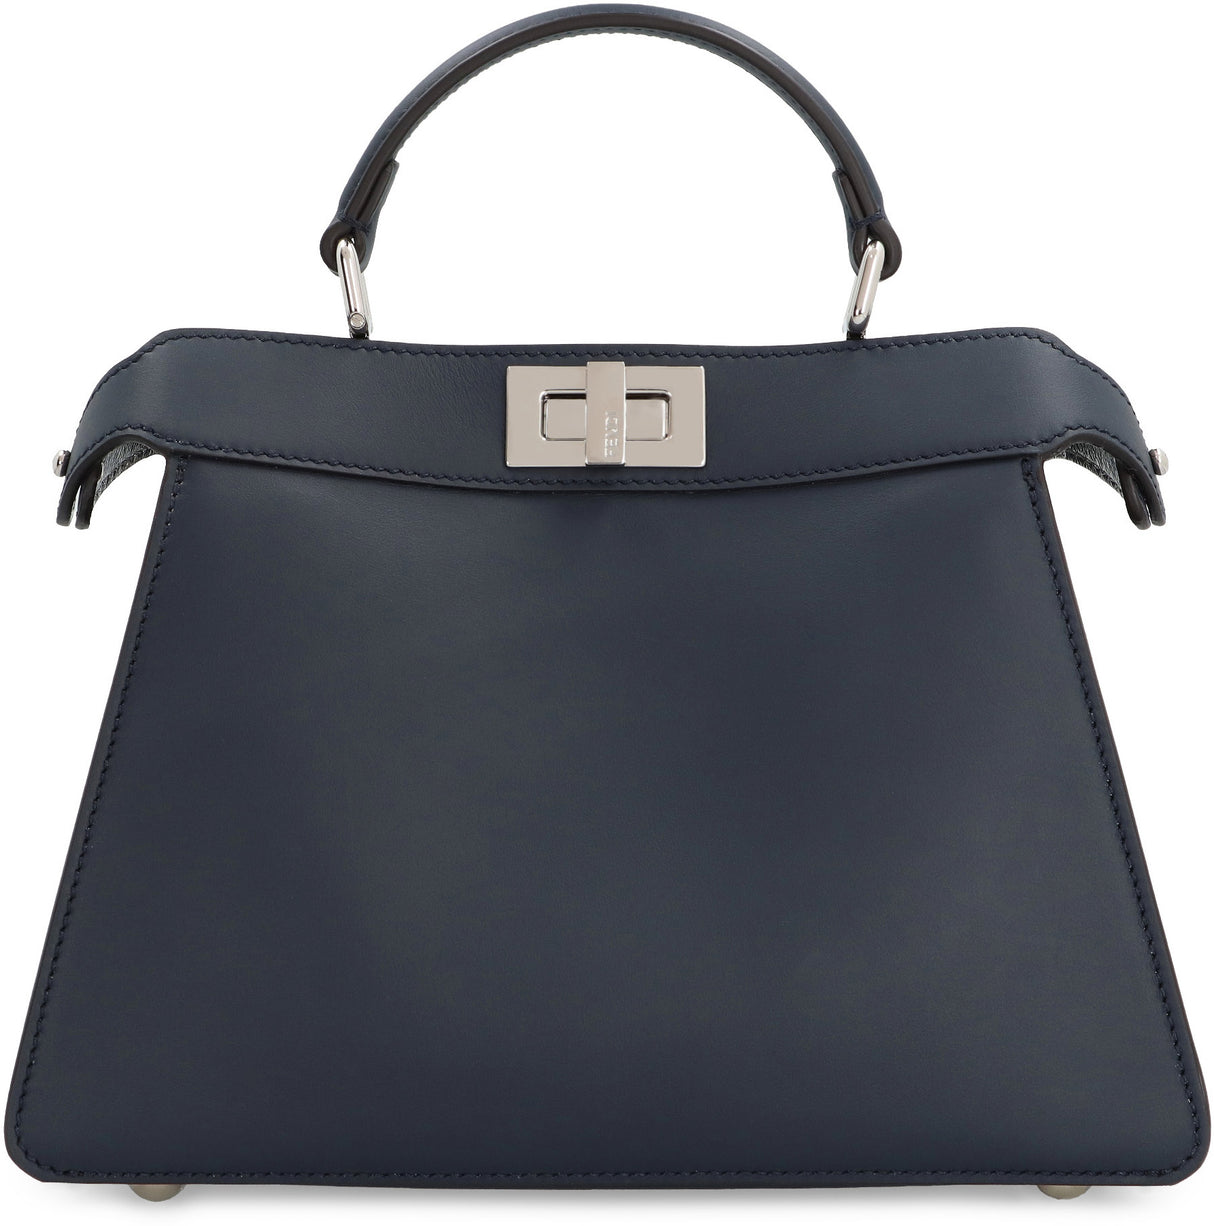 Blue Leather Top Handle Handbag for Women